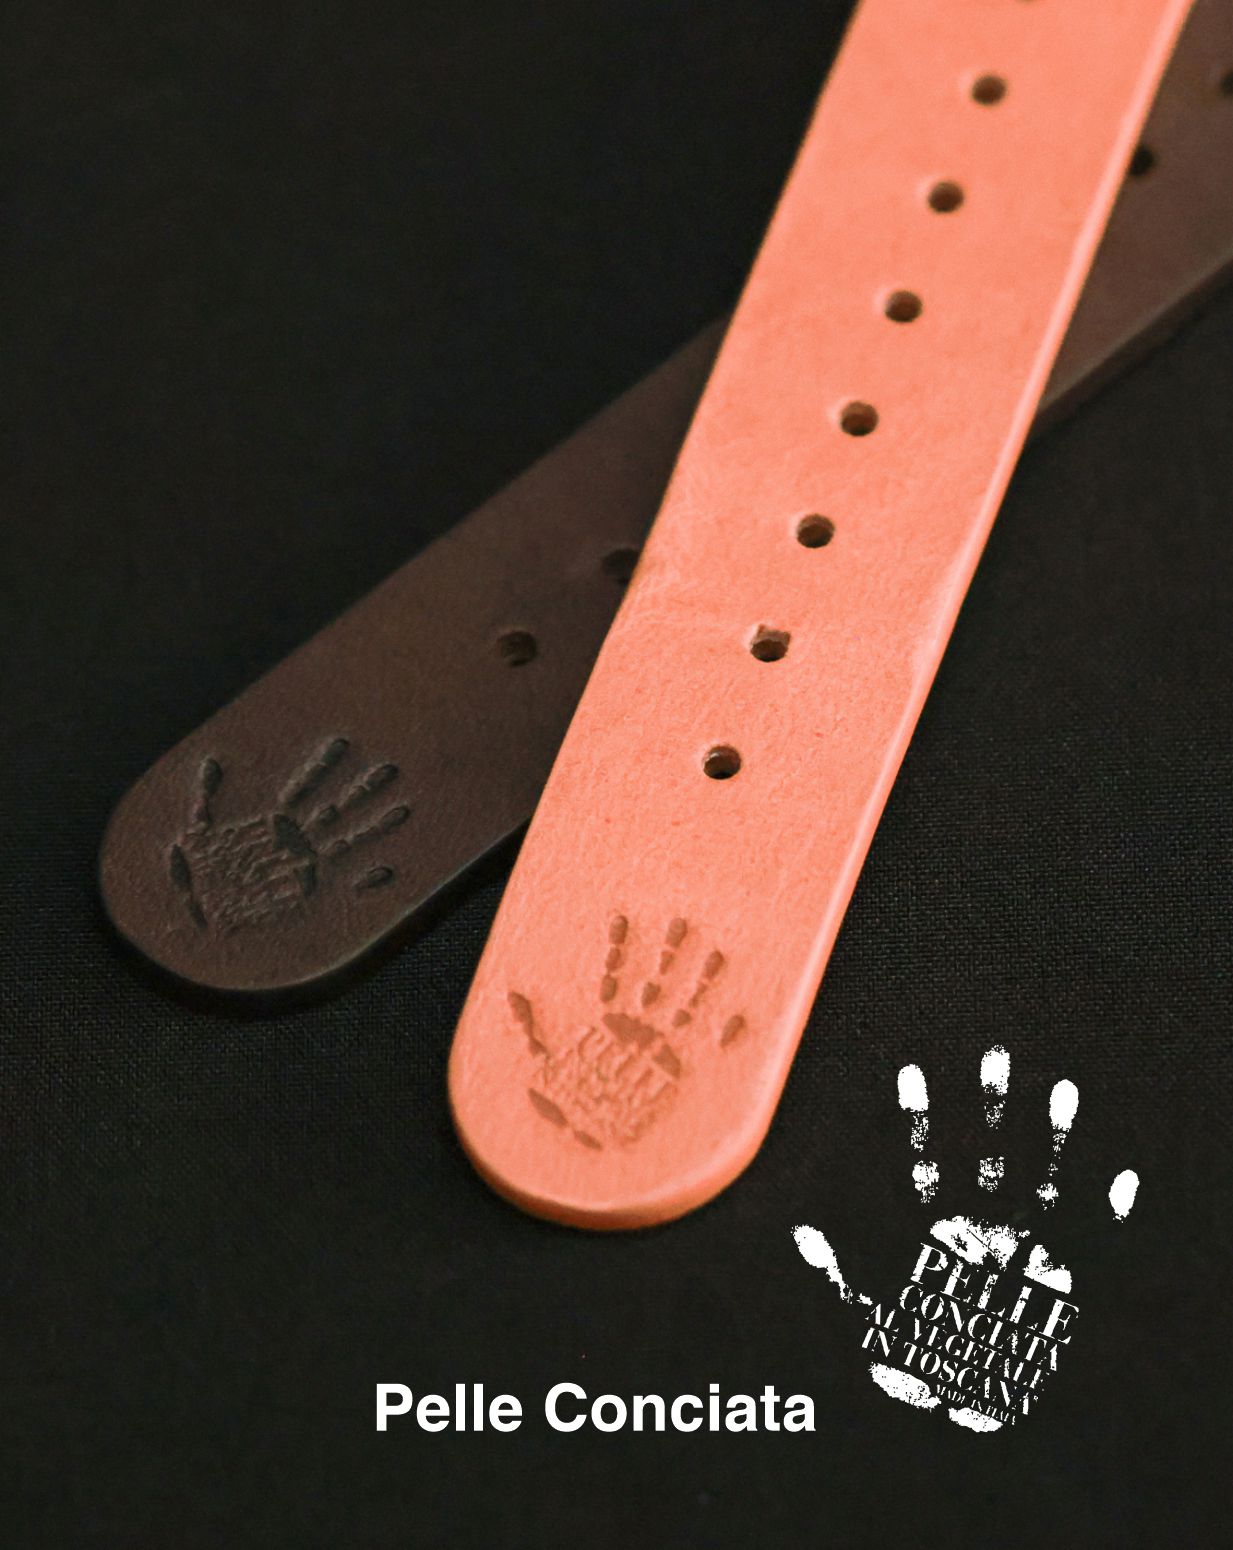 Sooda Solar Watch, Dark Brown | TACS - Wake Concept Store  